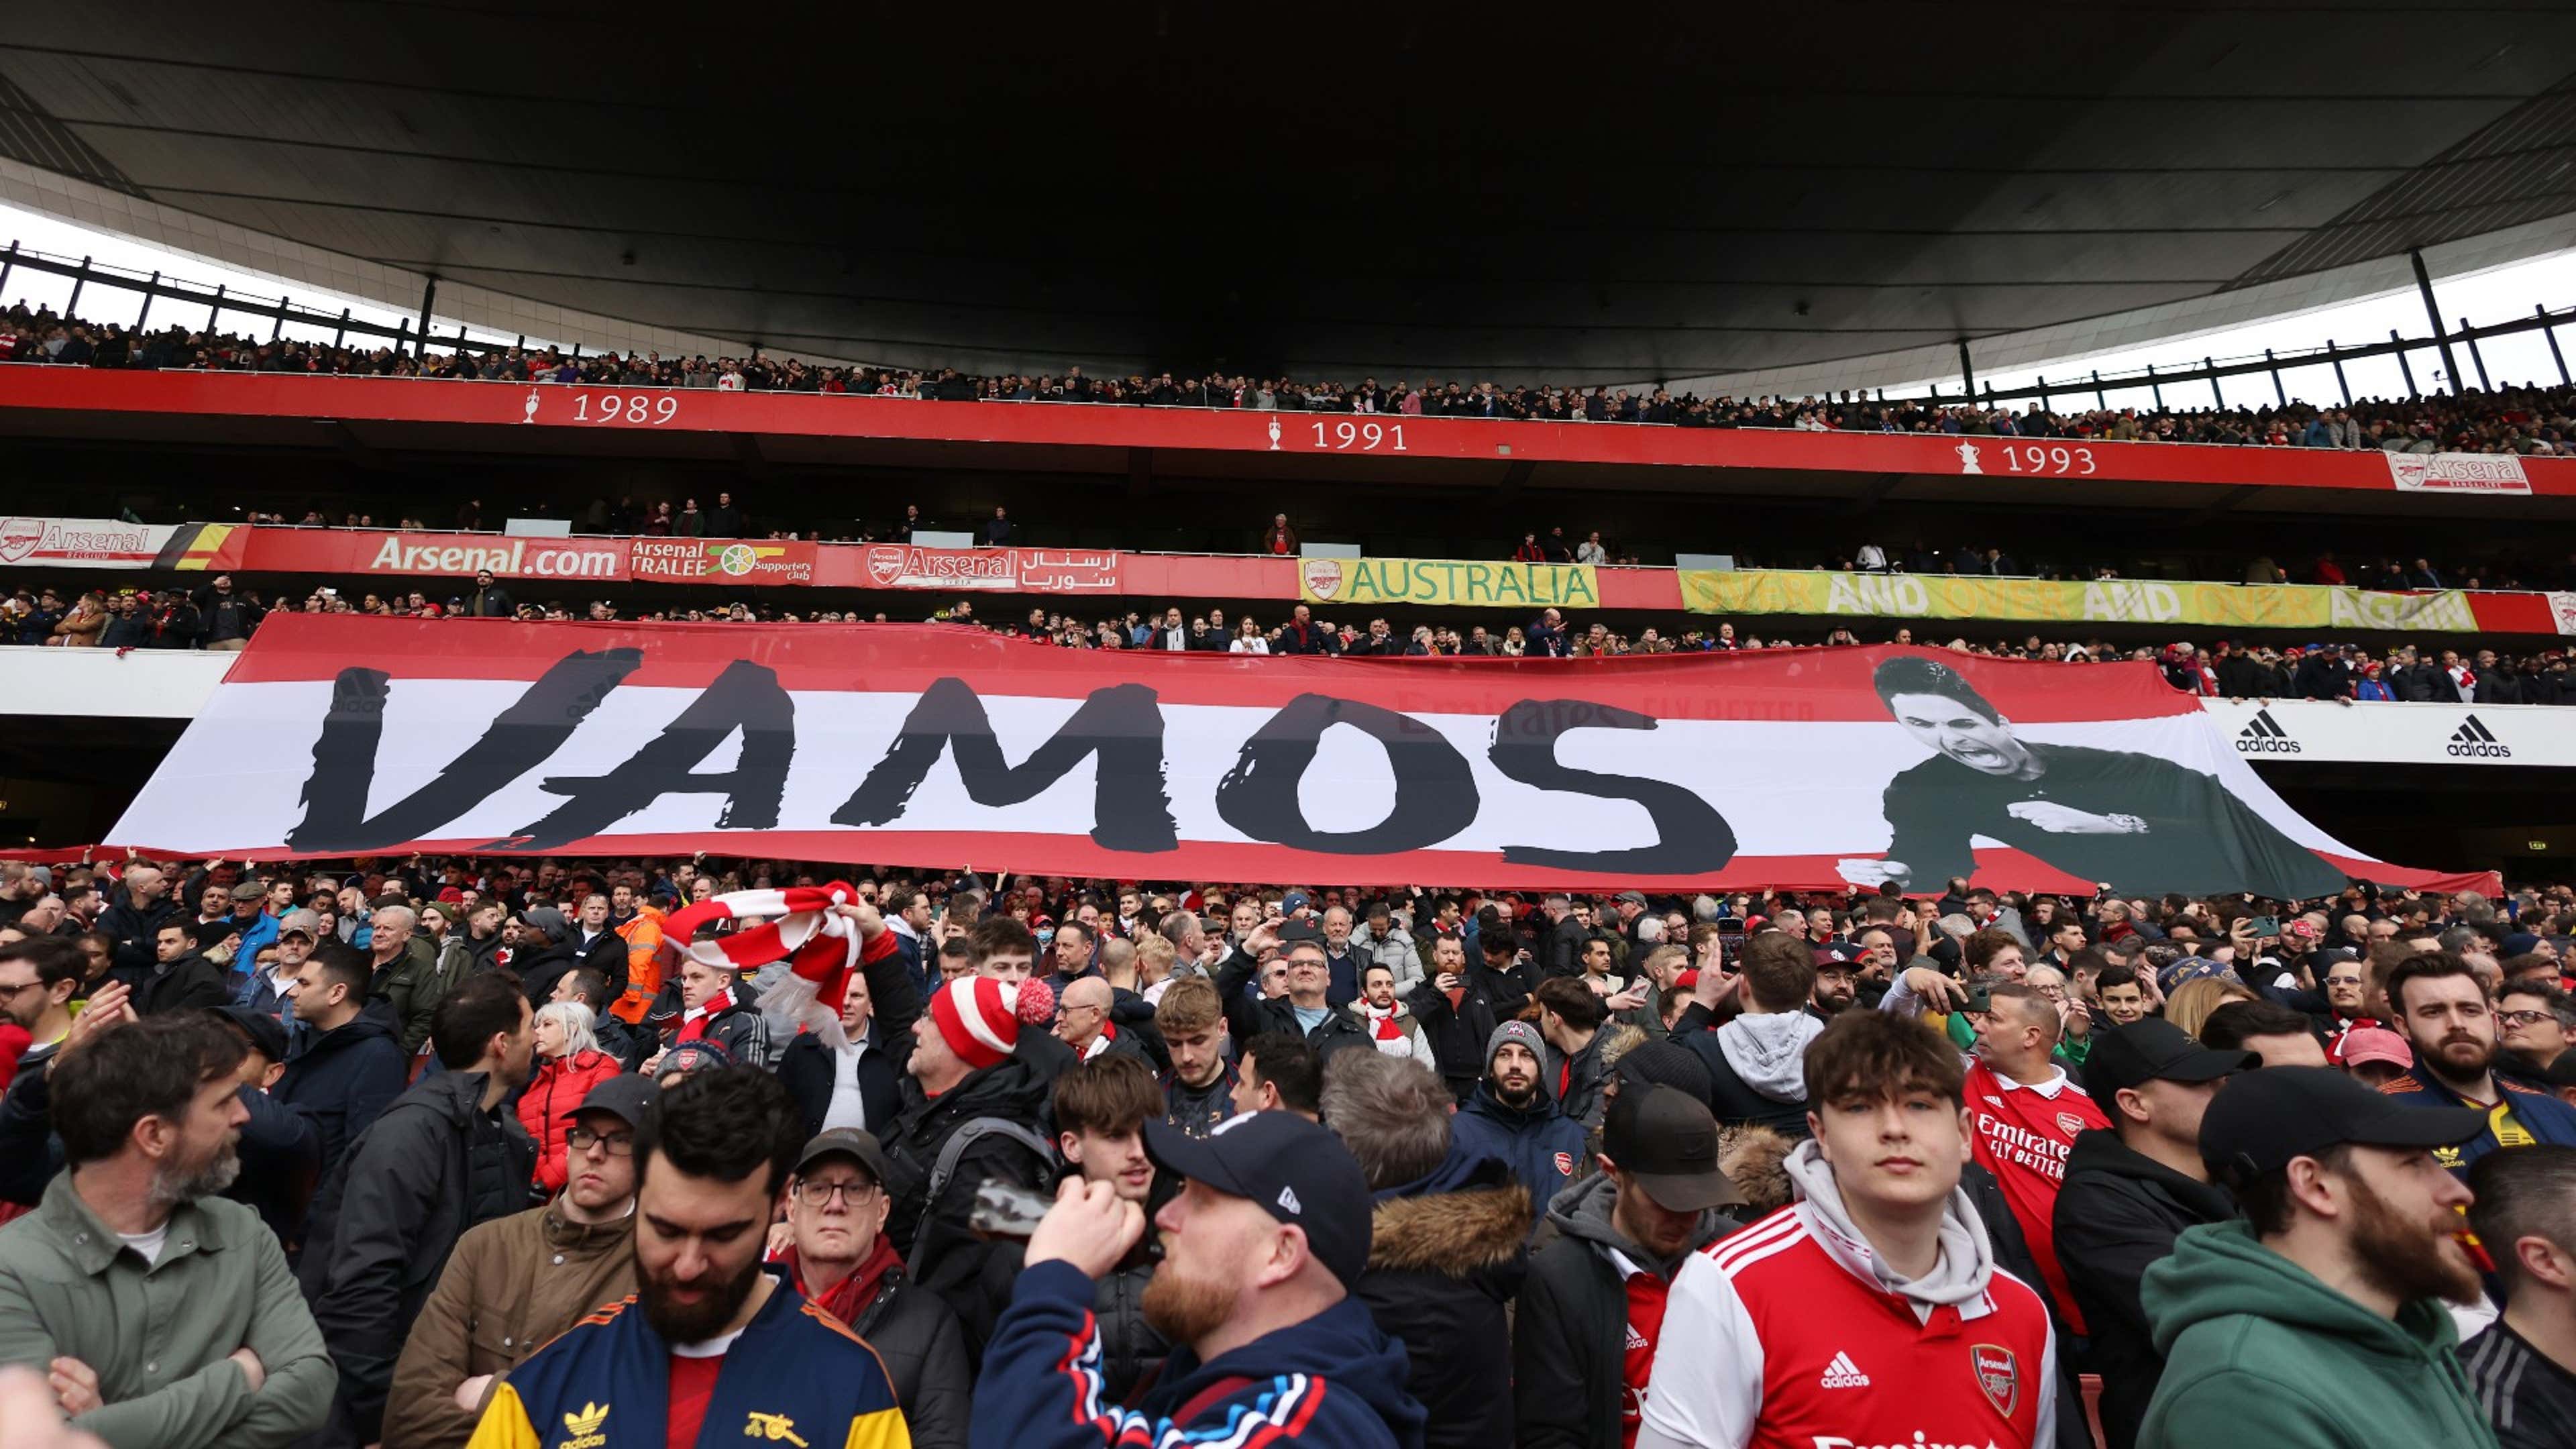 Arsenal add 2 more big games to pre-season schedule